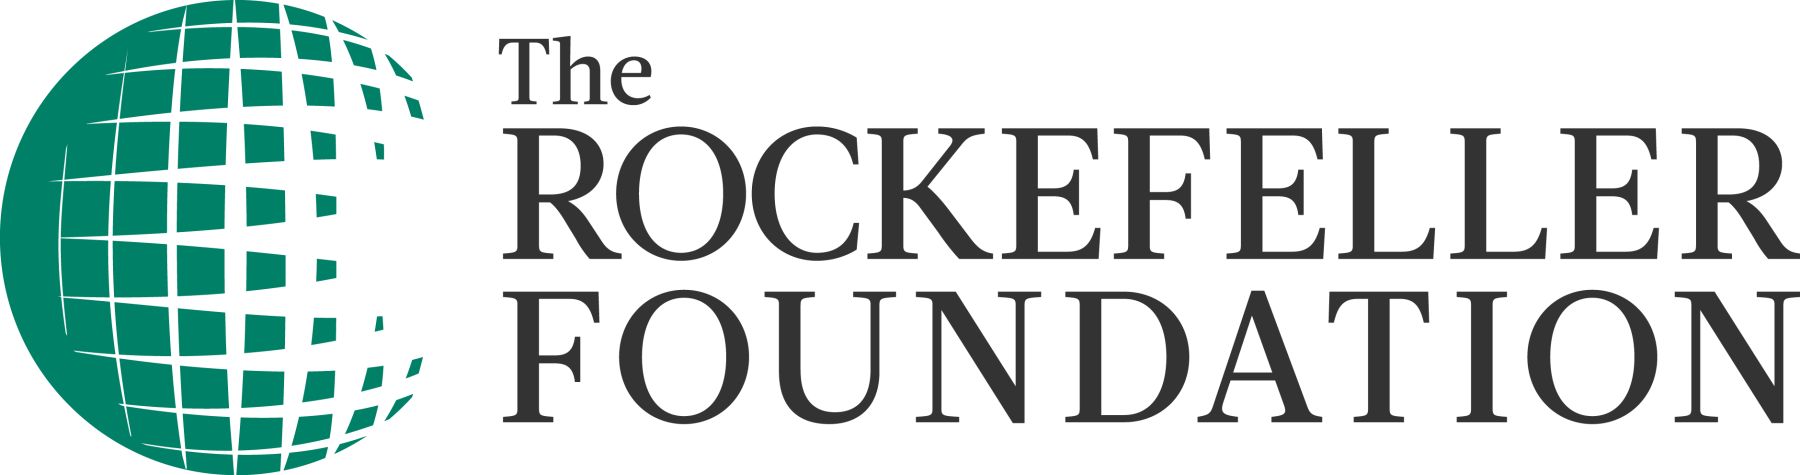 The-Rockefeller-Foundation